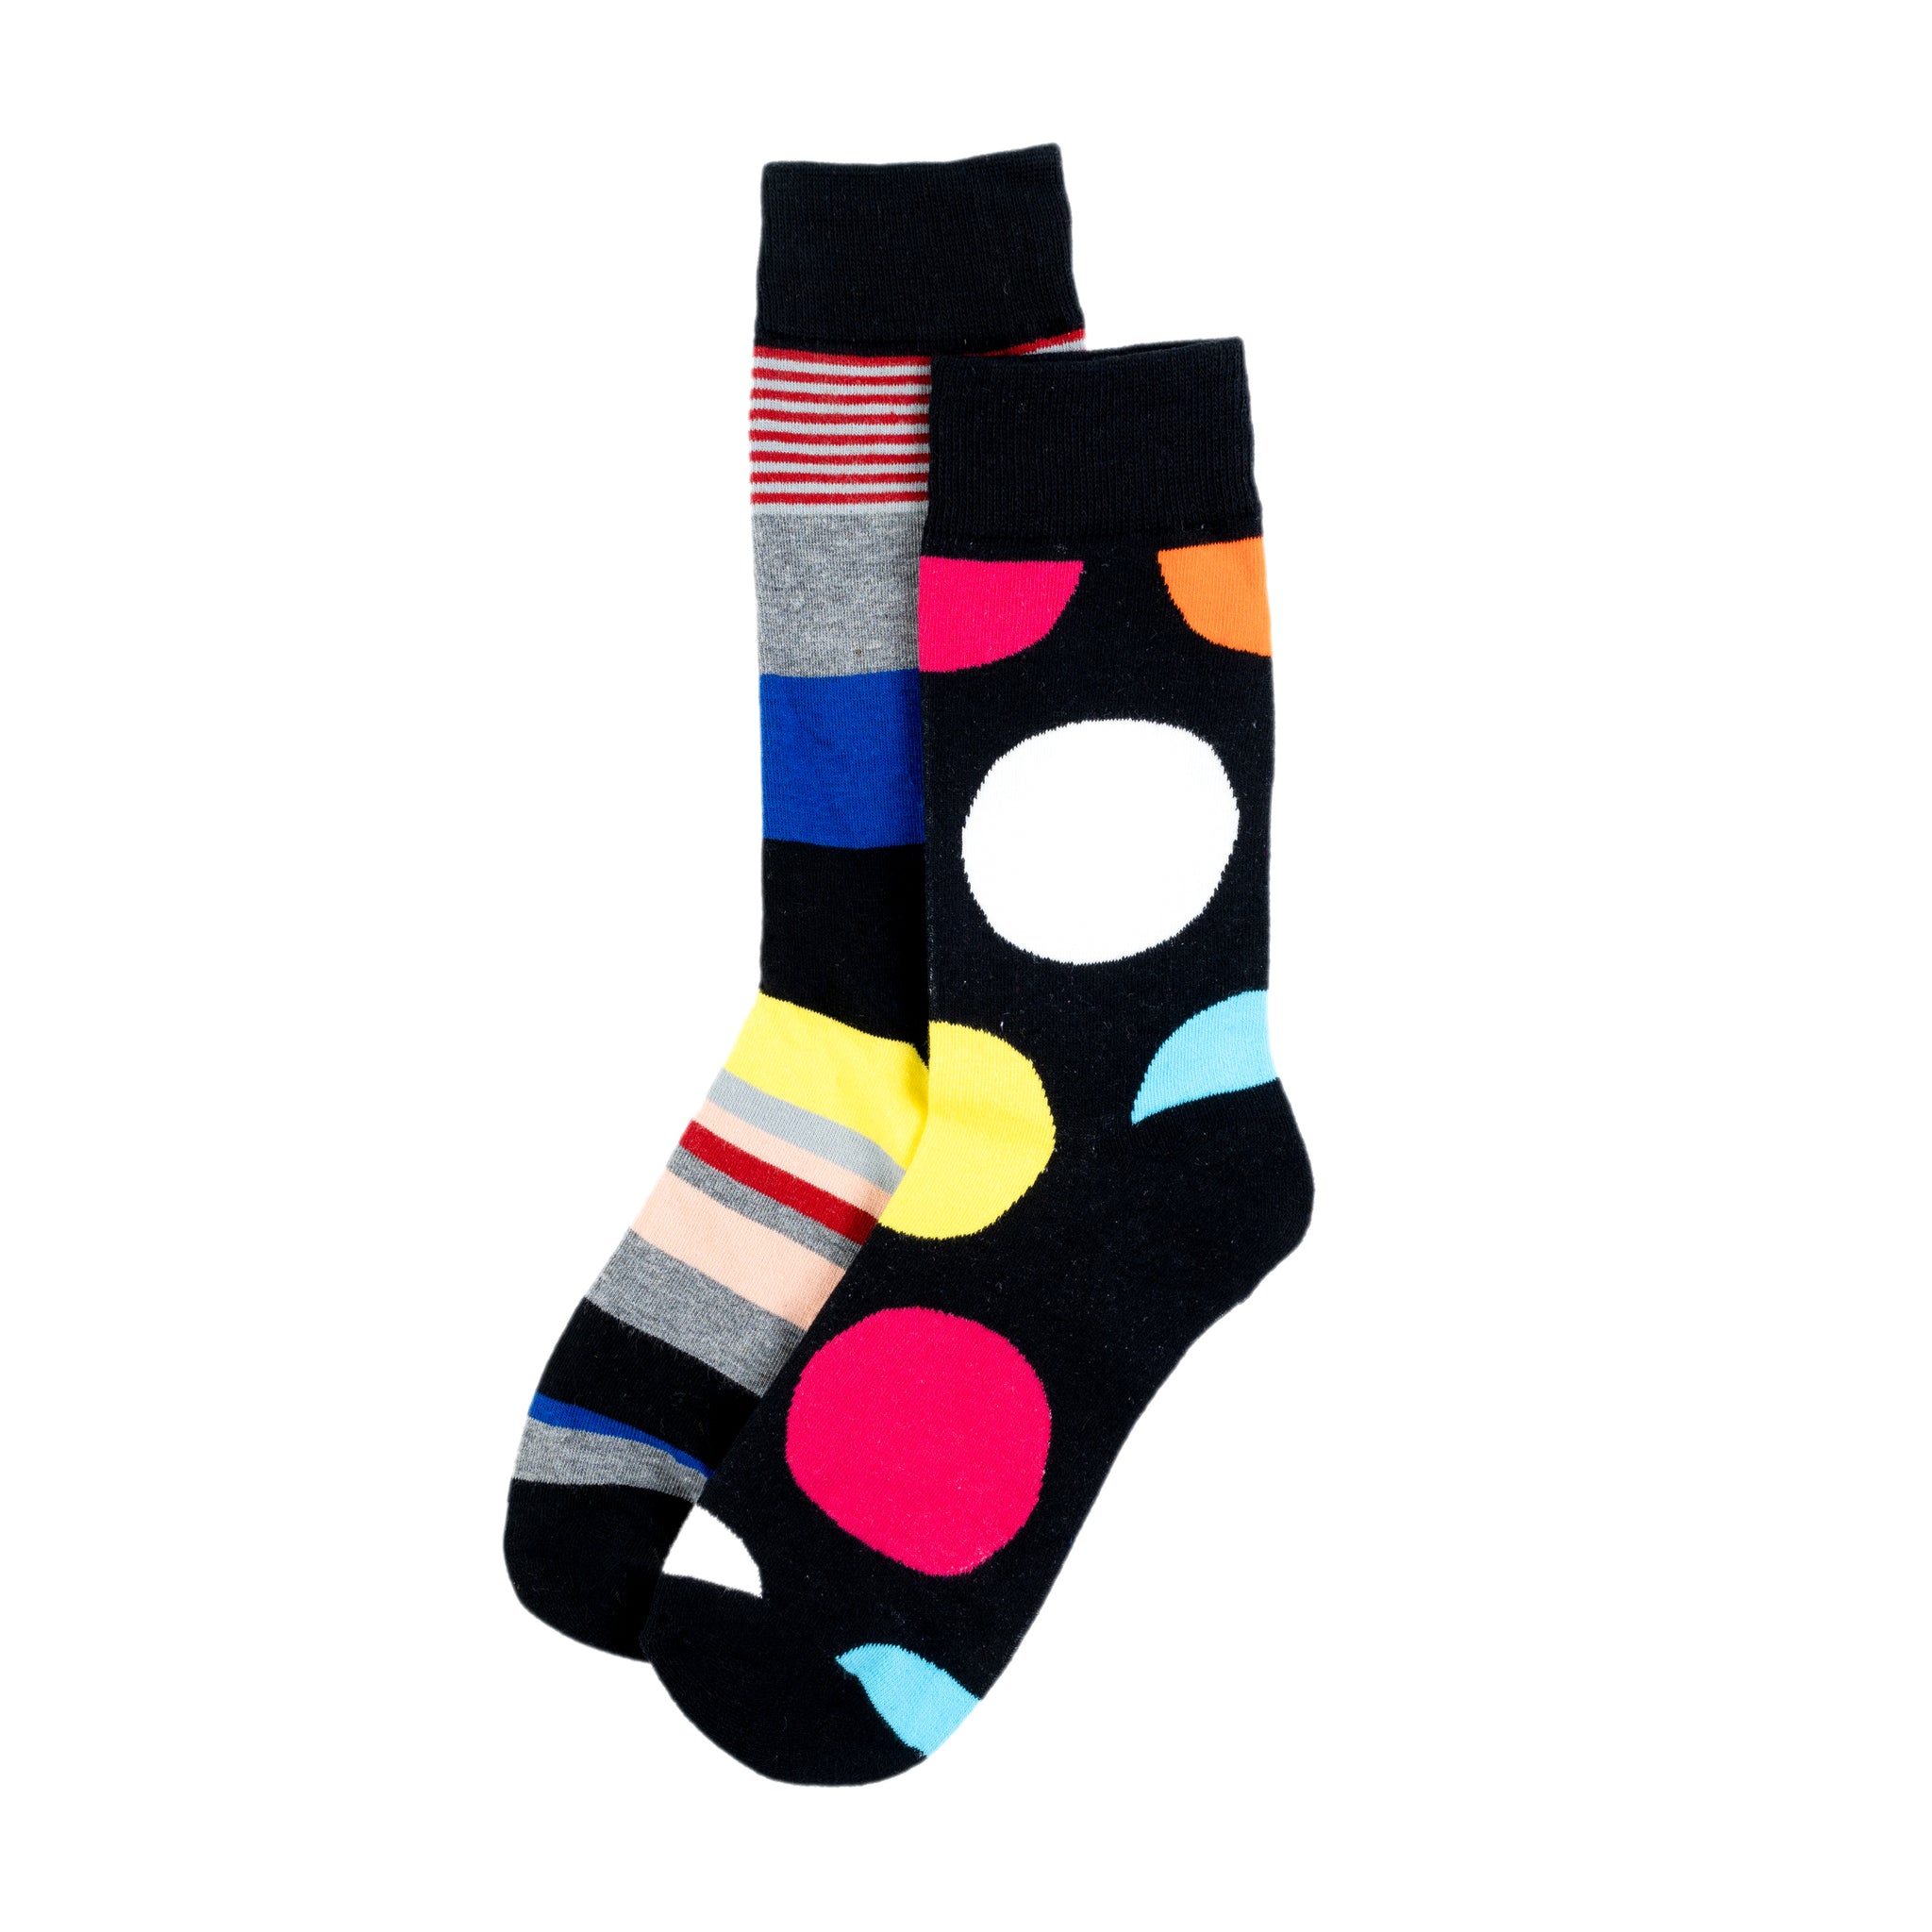 Chokore Black Striped Socks